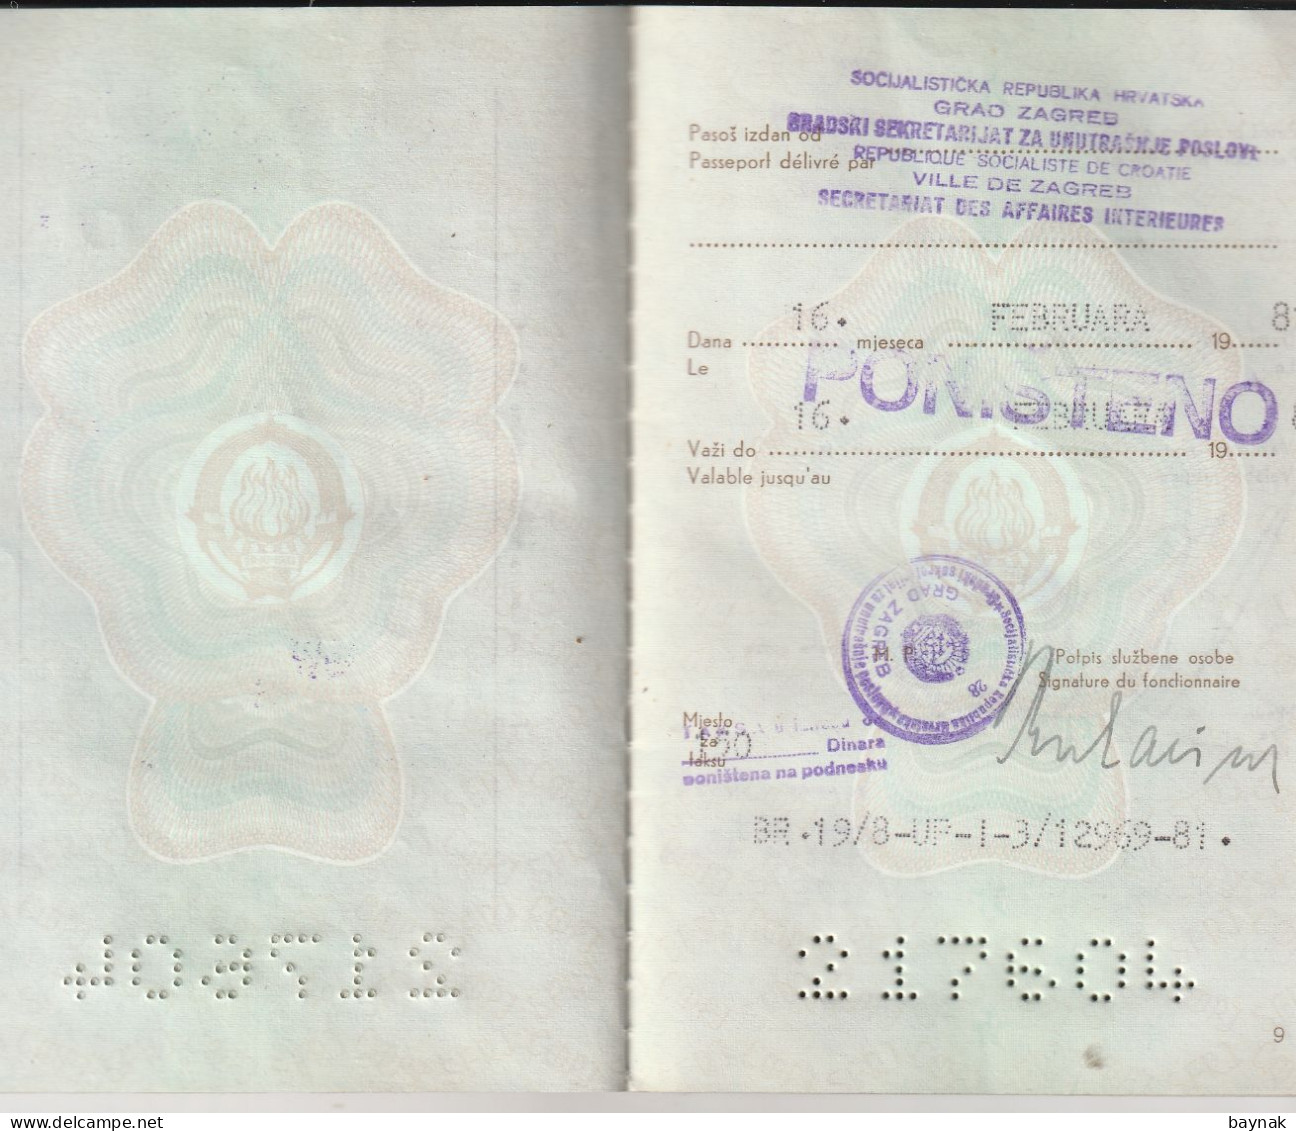 P304 -   SFR YUGOSLAVIA   --  PASSPORT    -  LADY  - 1981  --  VISA:  KENYA  ( EAST AFRICA ), MALAYSIA, SINGAPORE, - Historical Documents